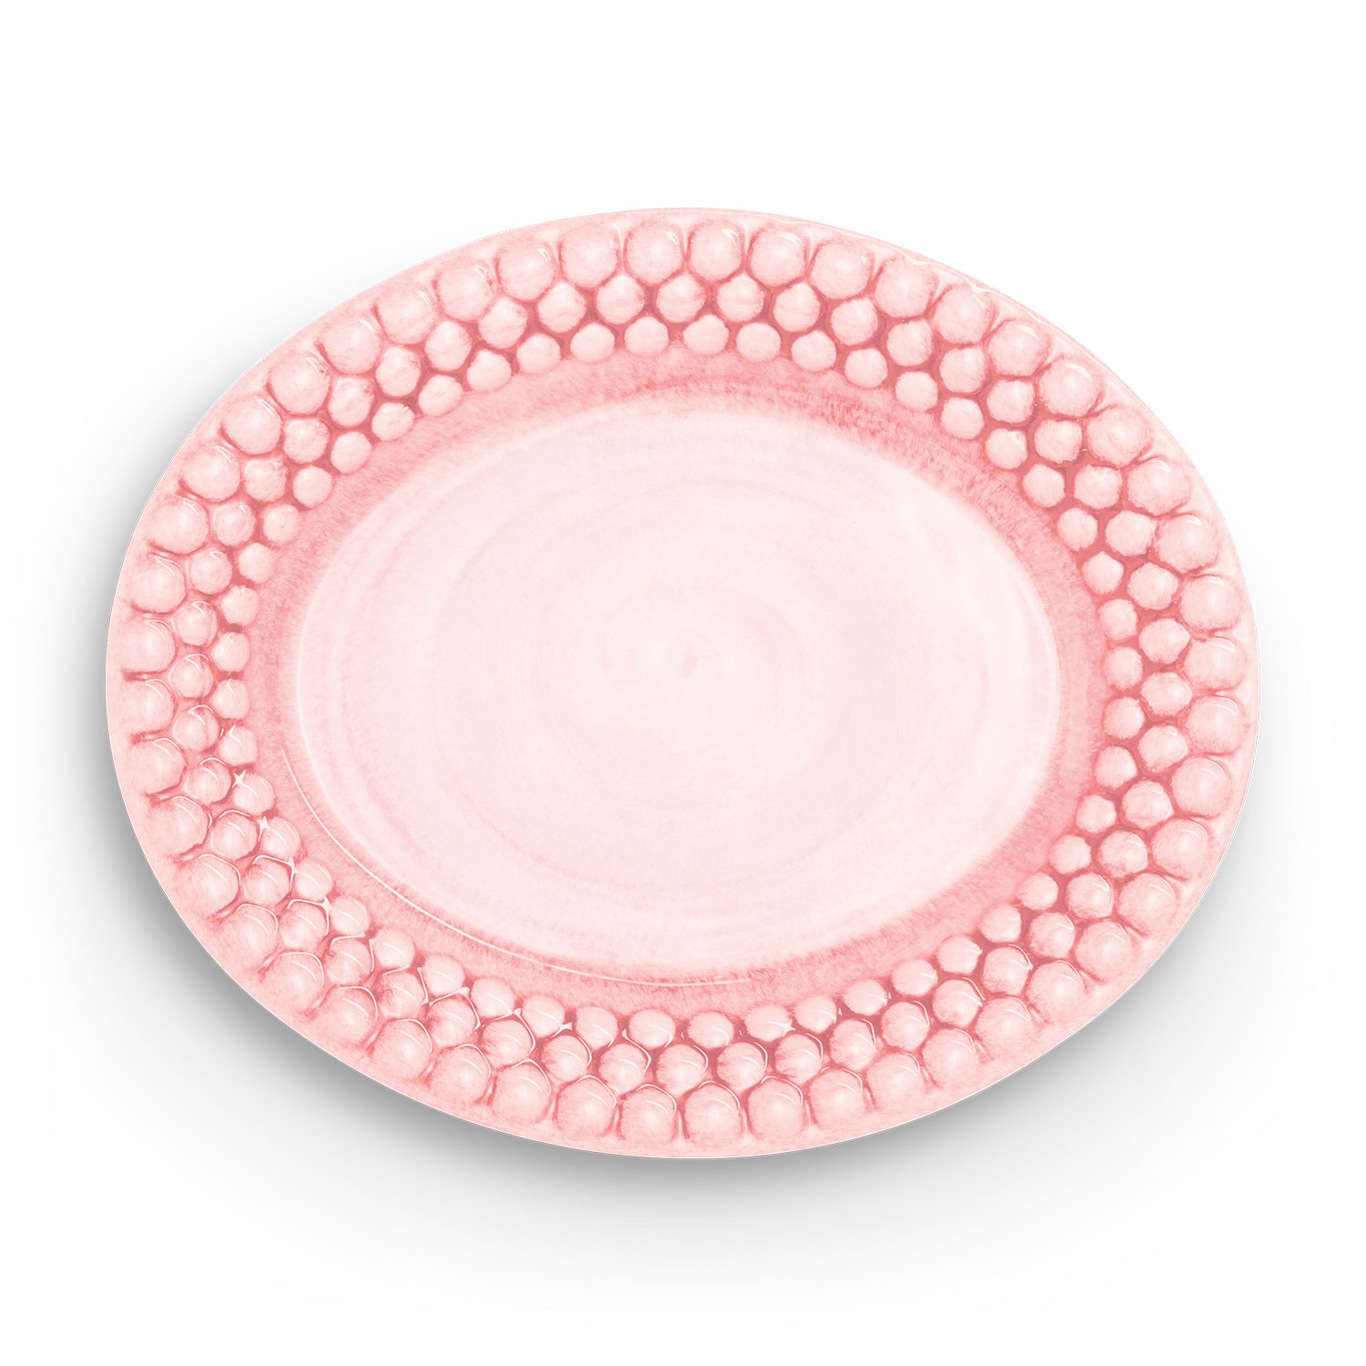 Bubbles Oval Plate 20 cm, Light Pink